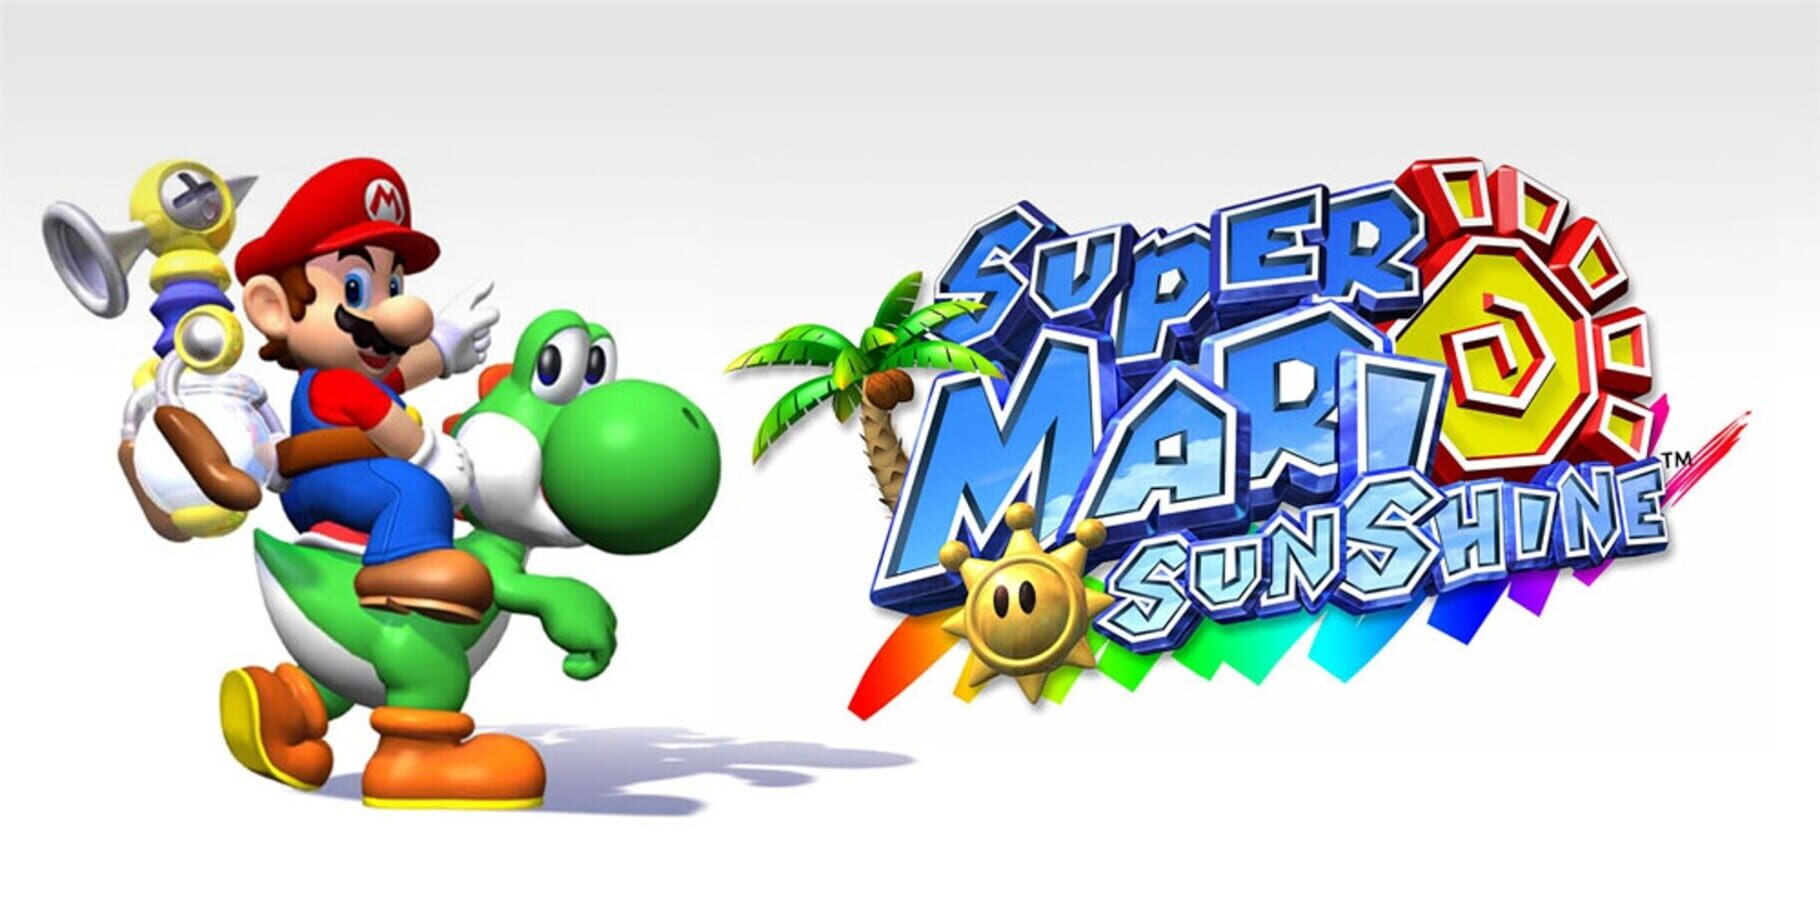 Super Mario Sunshine Image